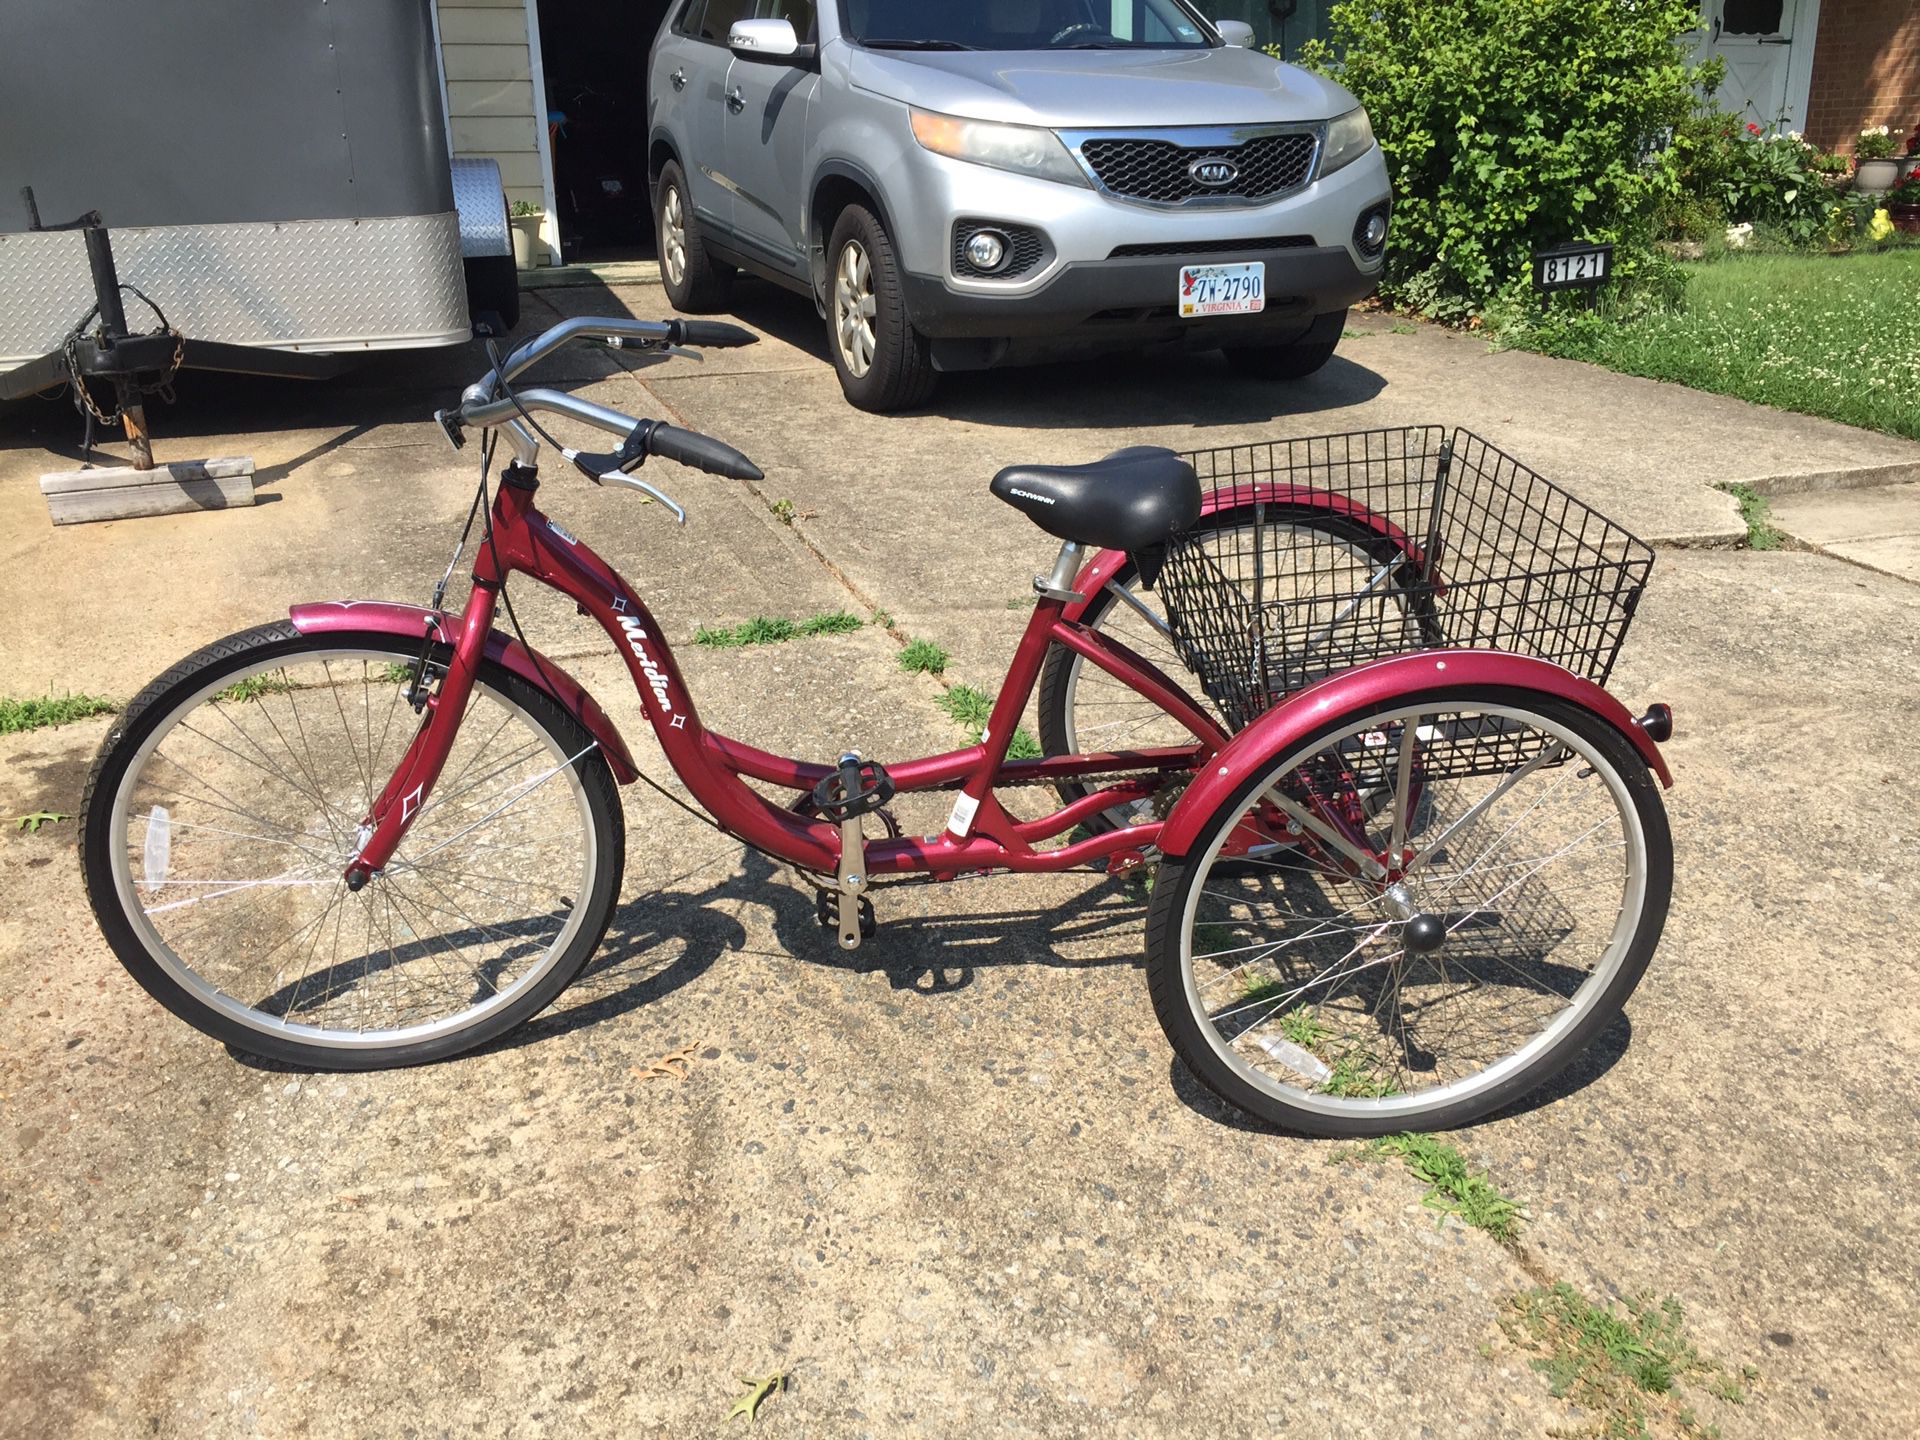 26” Adult tricycle bike